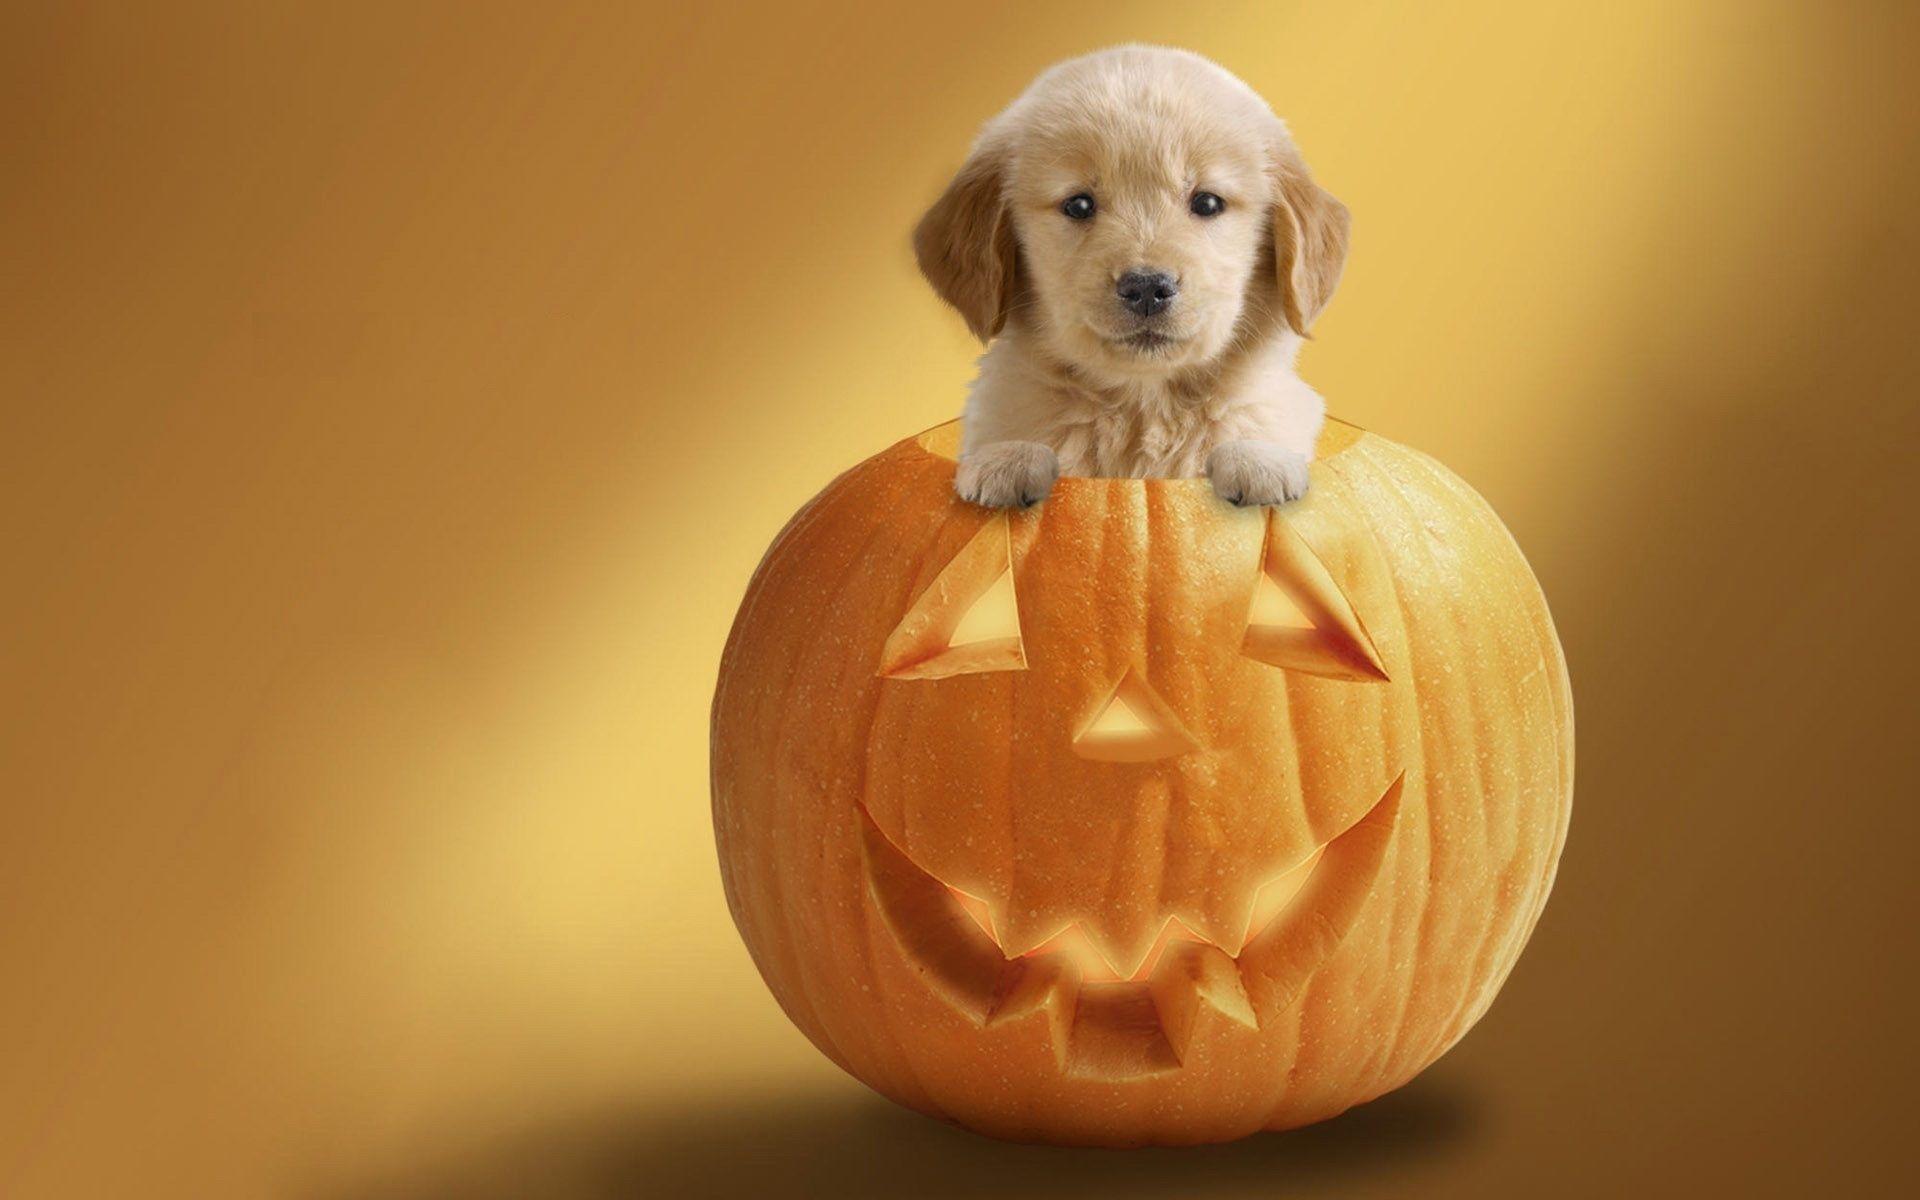 Dog in pumpkin wallpaper and image. Halloween puppy, Dog halloween, Cute puppies